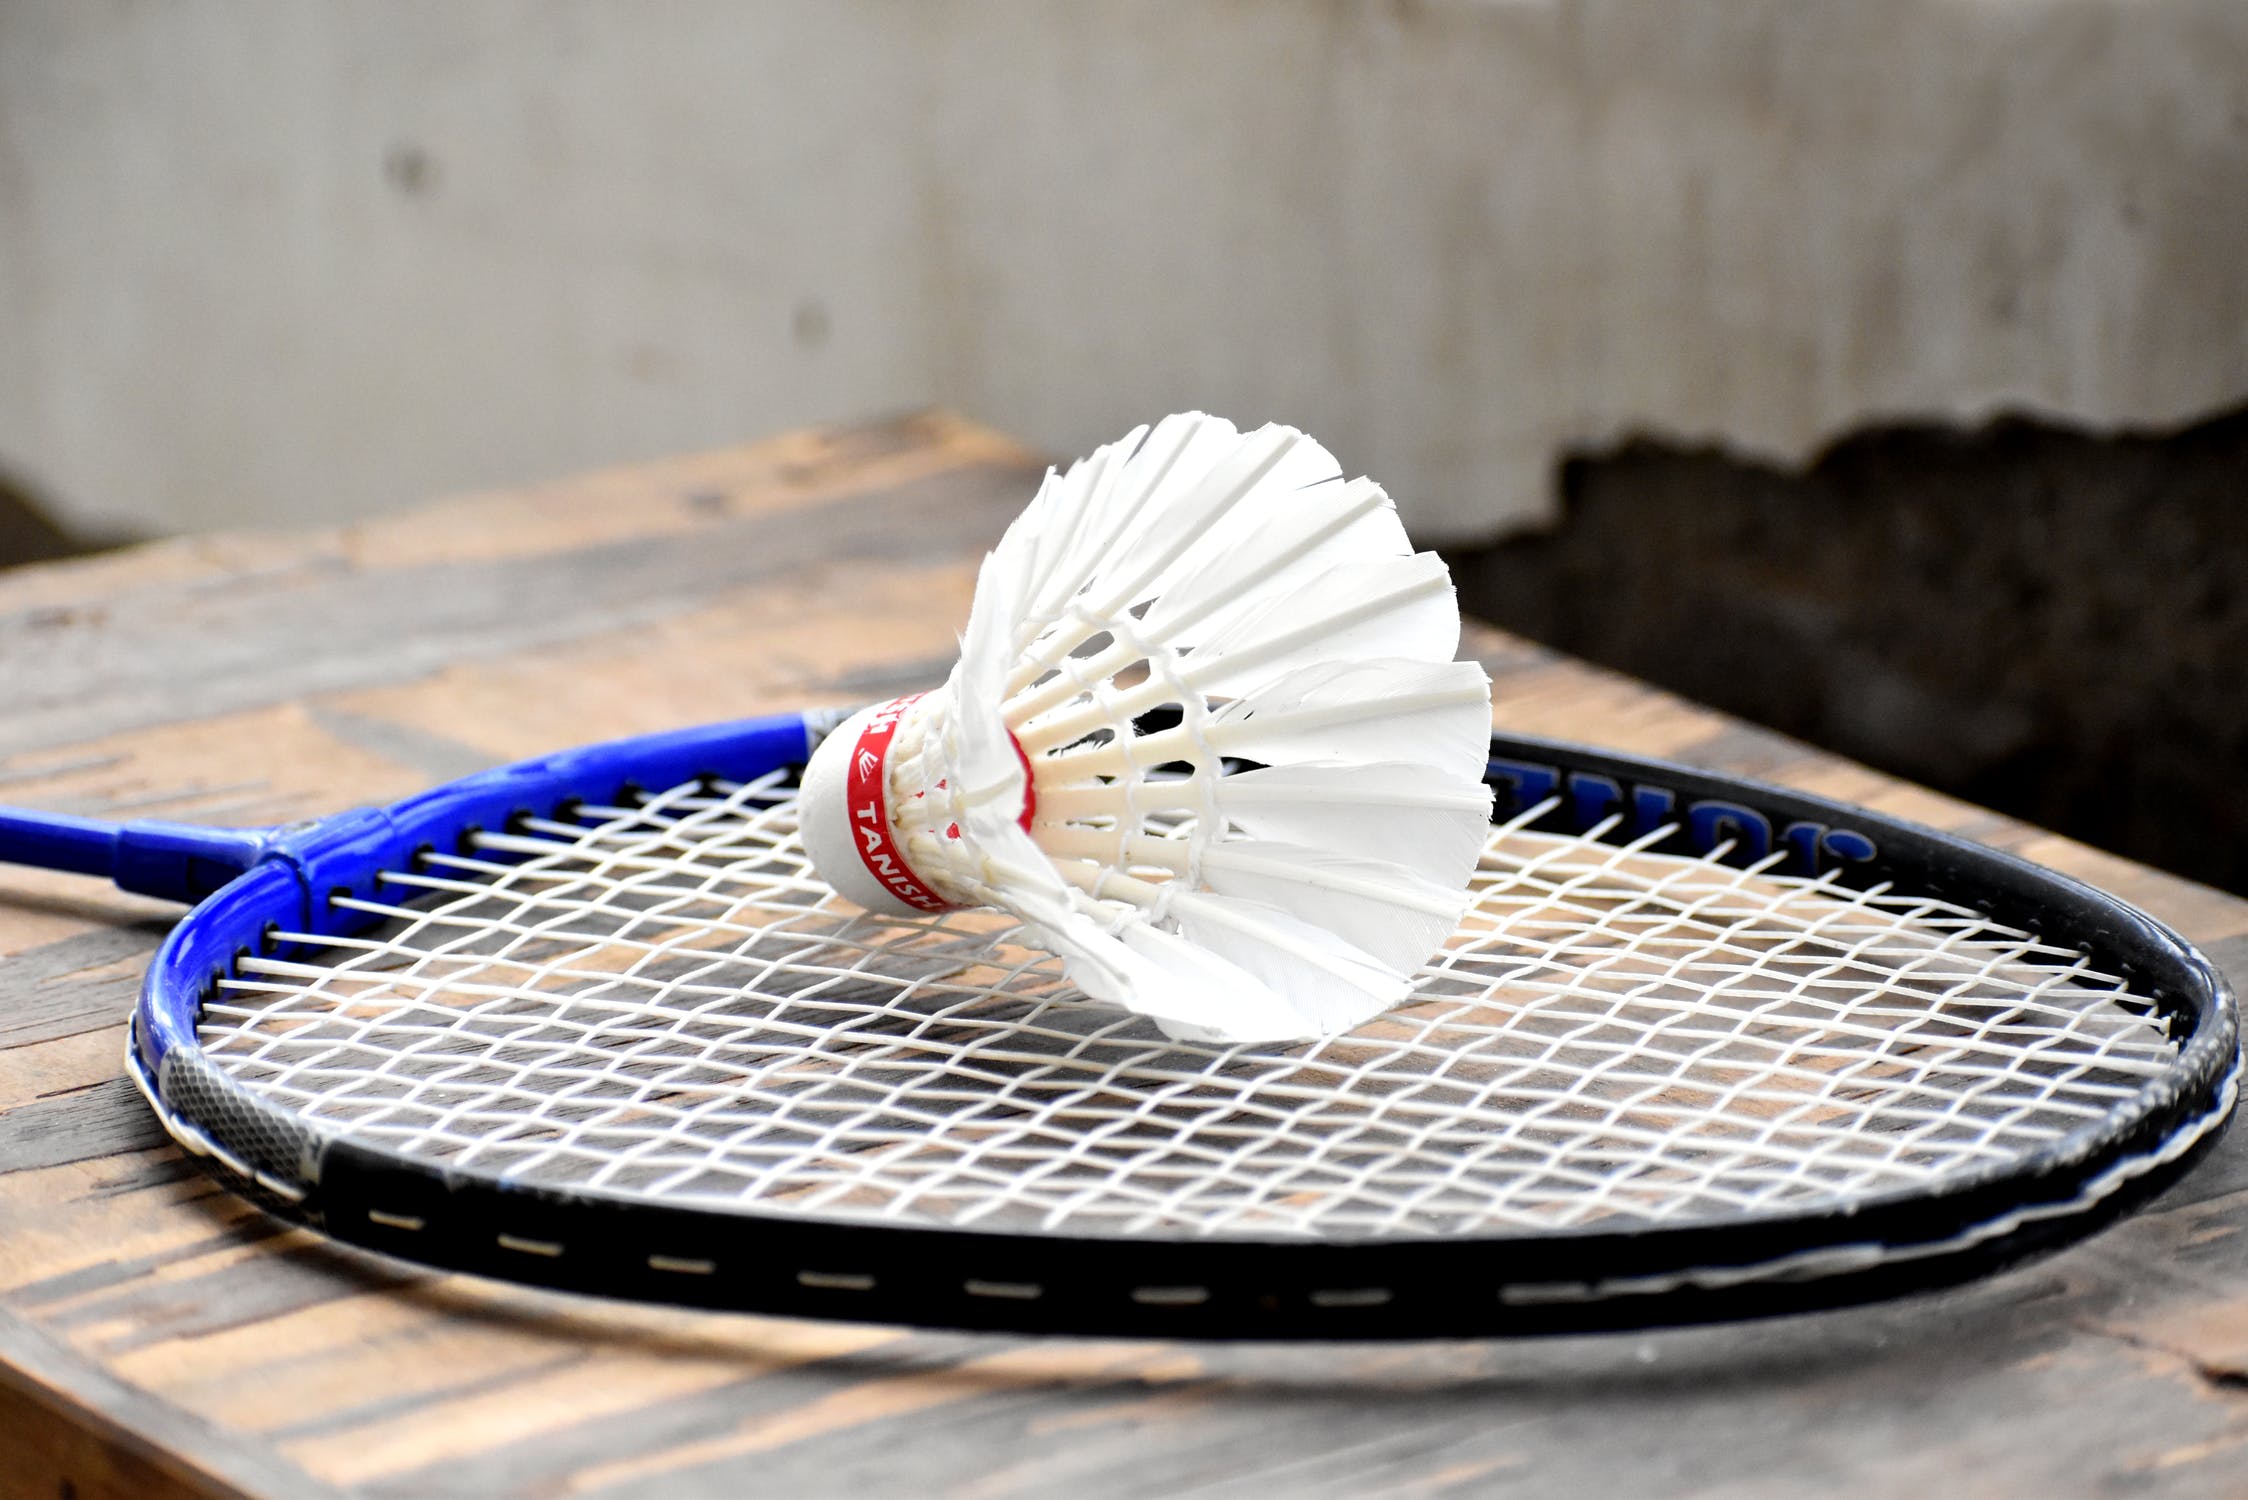 badminton_2